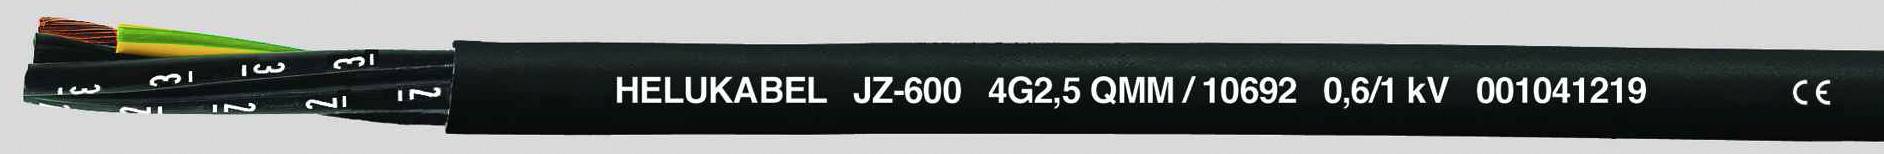 HELUKABEL JZ-600 Steuerleitung 7 G 1 mm² Schwarz 10624-1000 1000 m